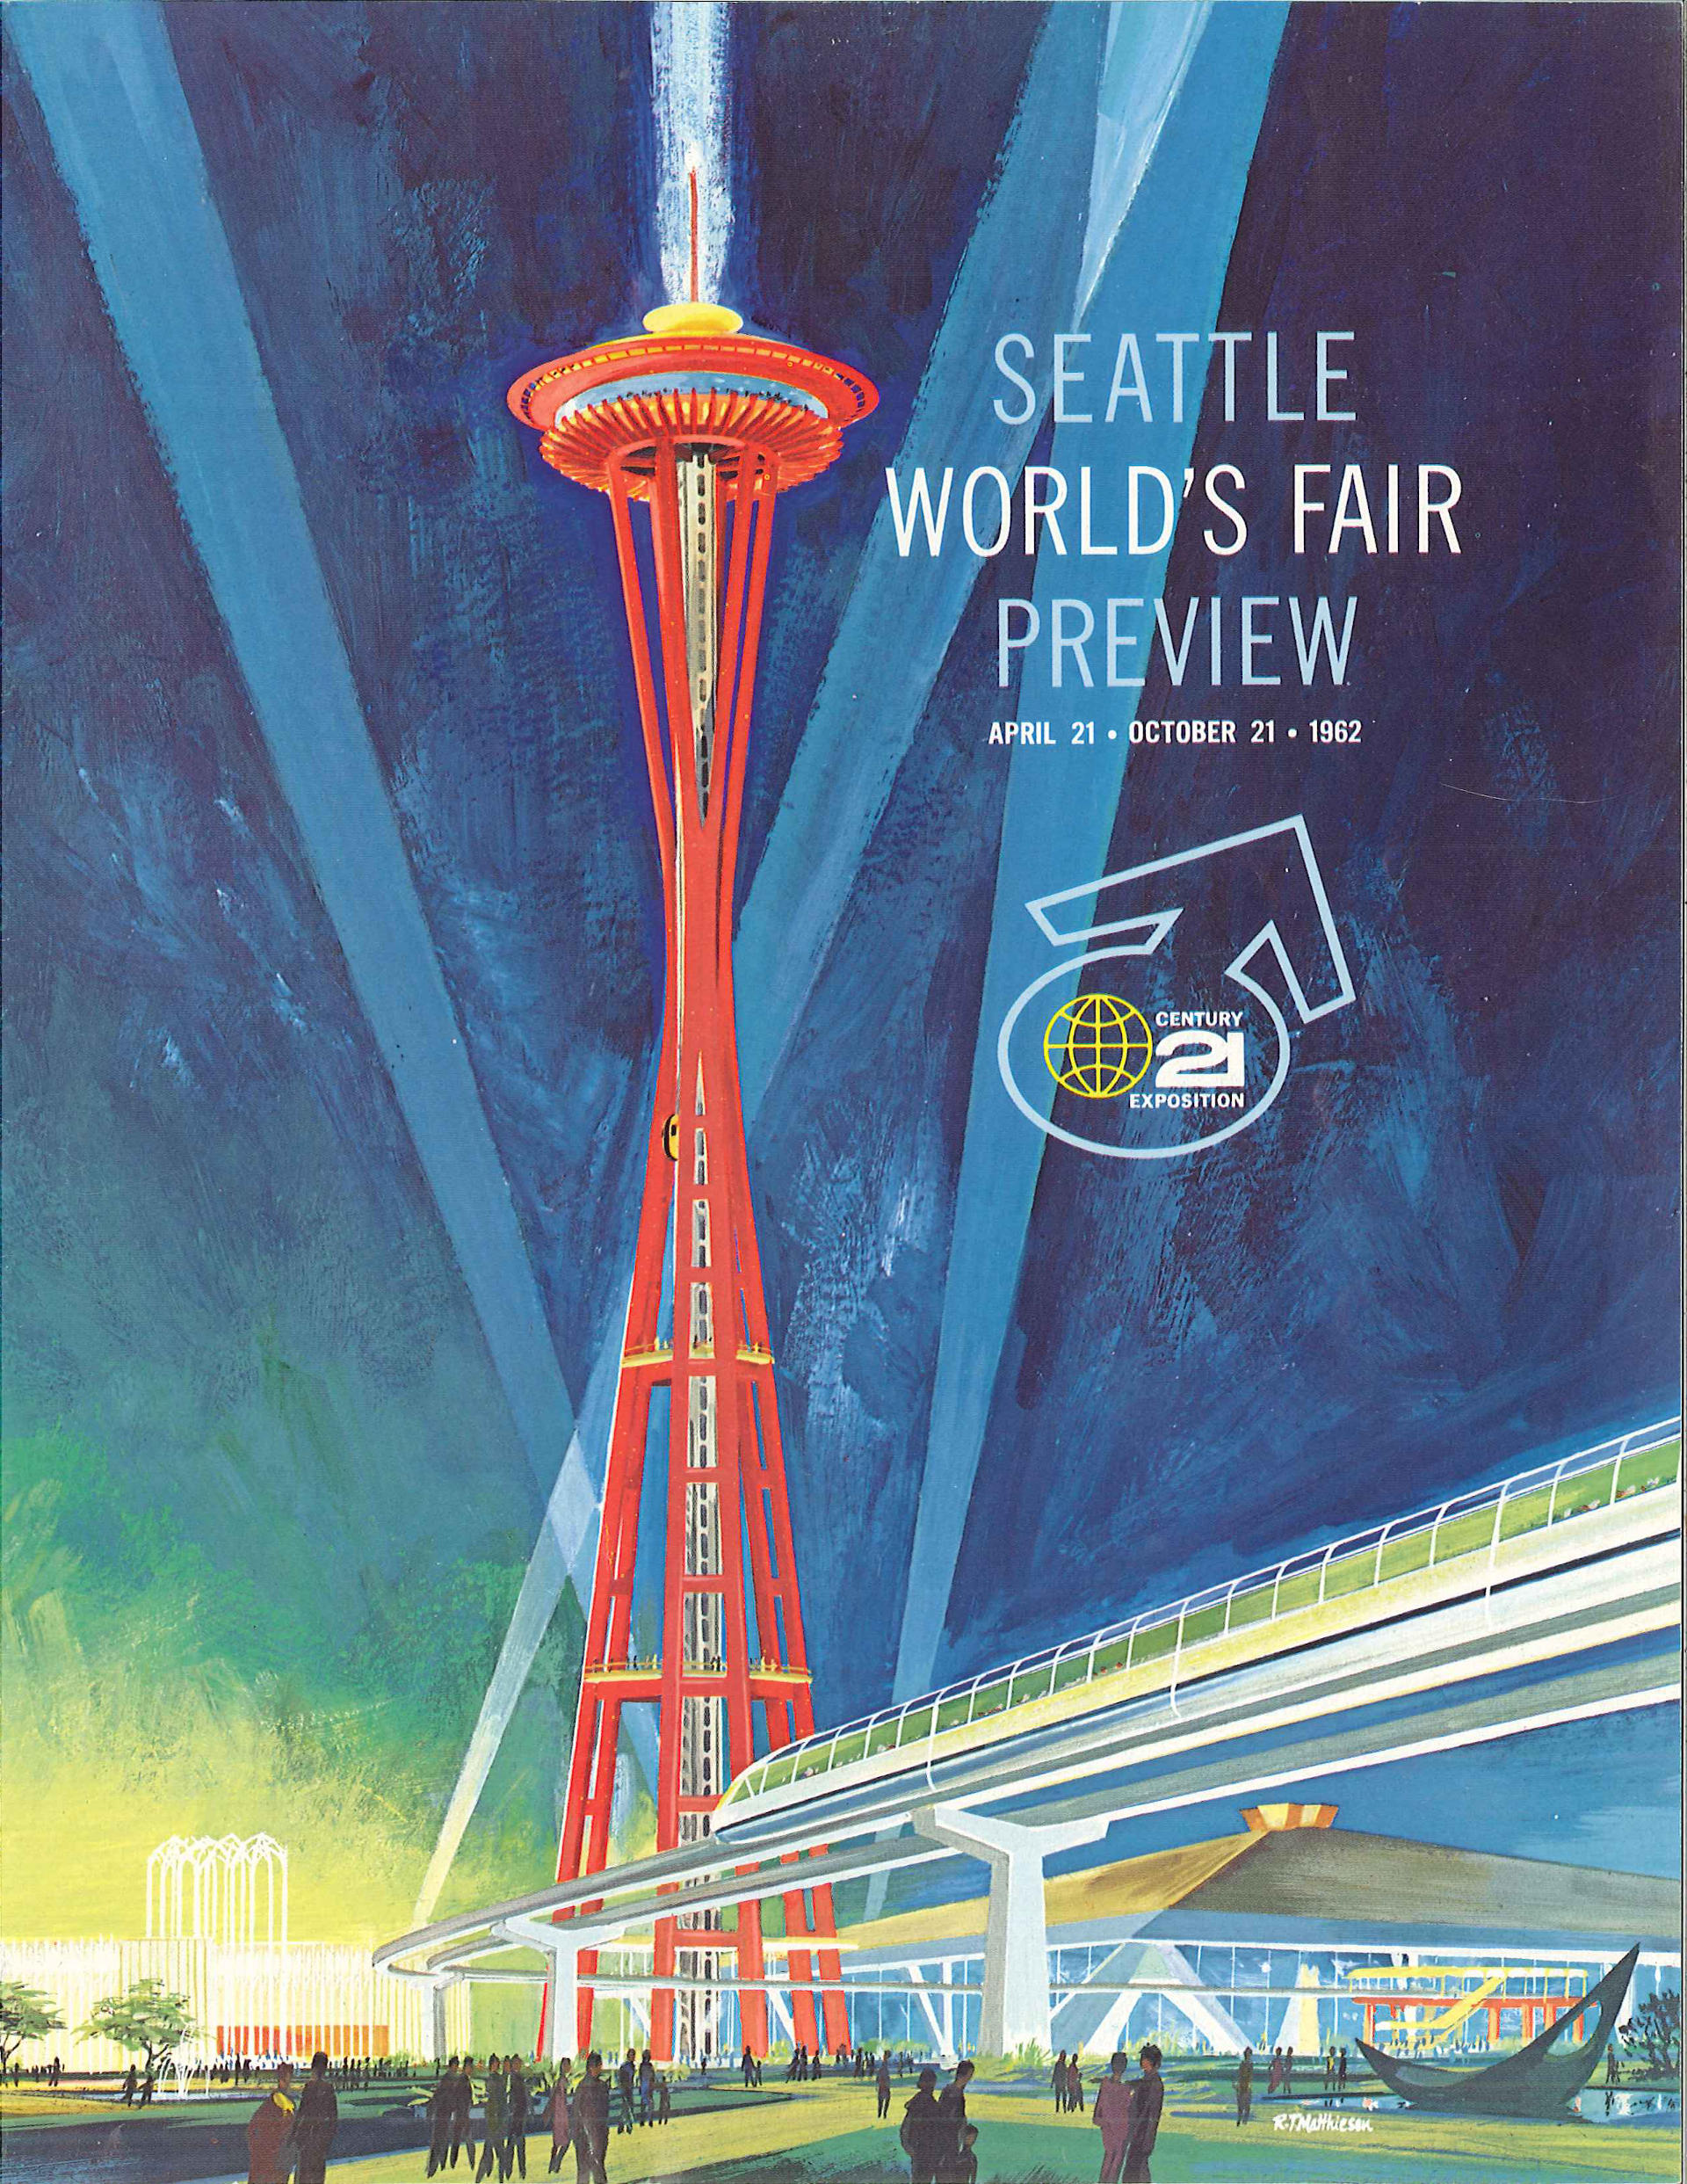 Seattle's World Fair: A Historic Landmark | Seattle Premier Attractions